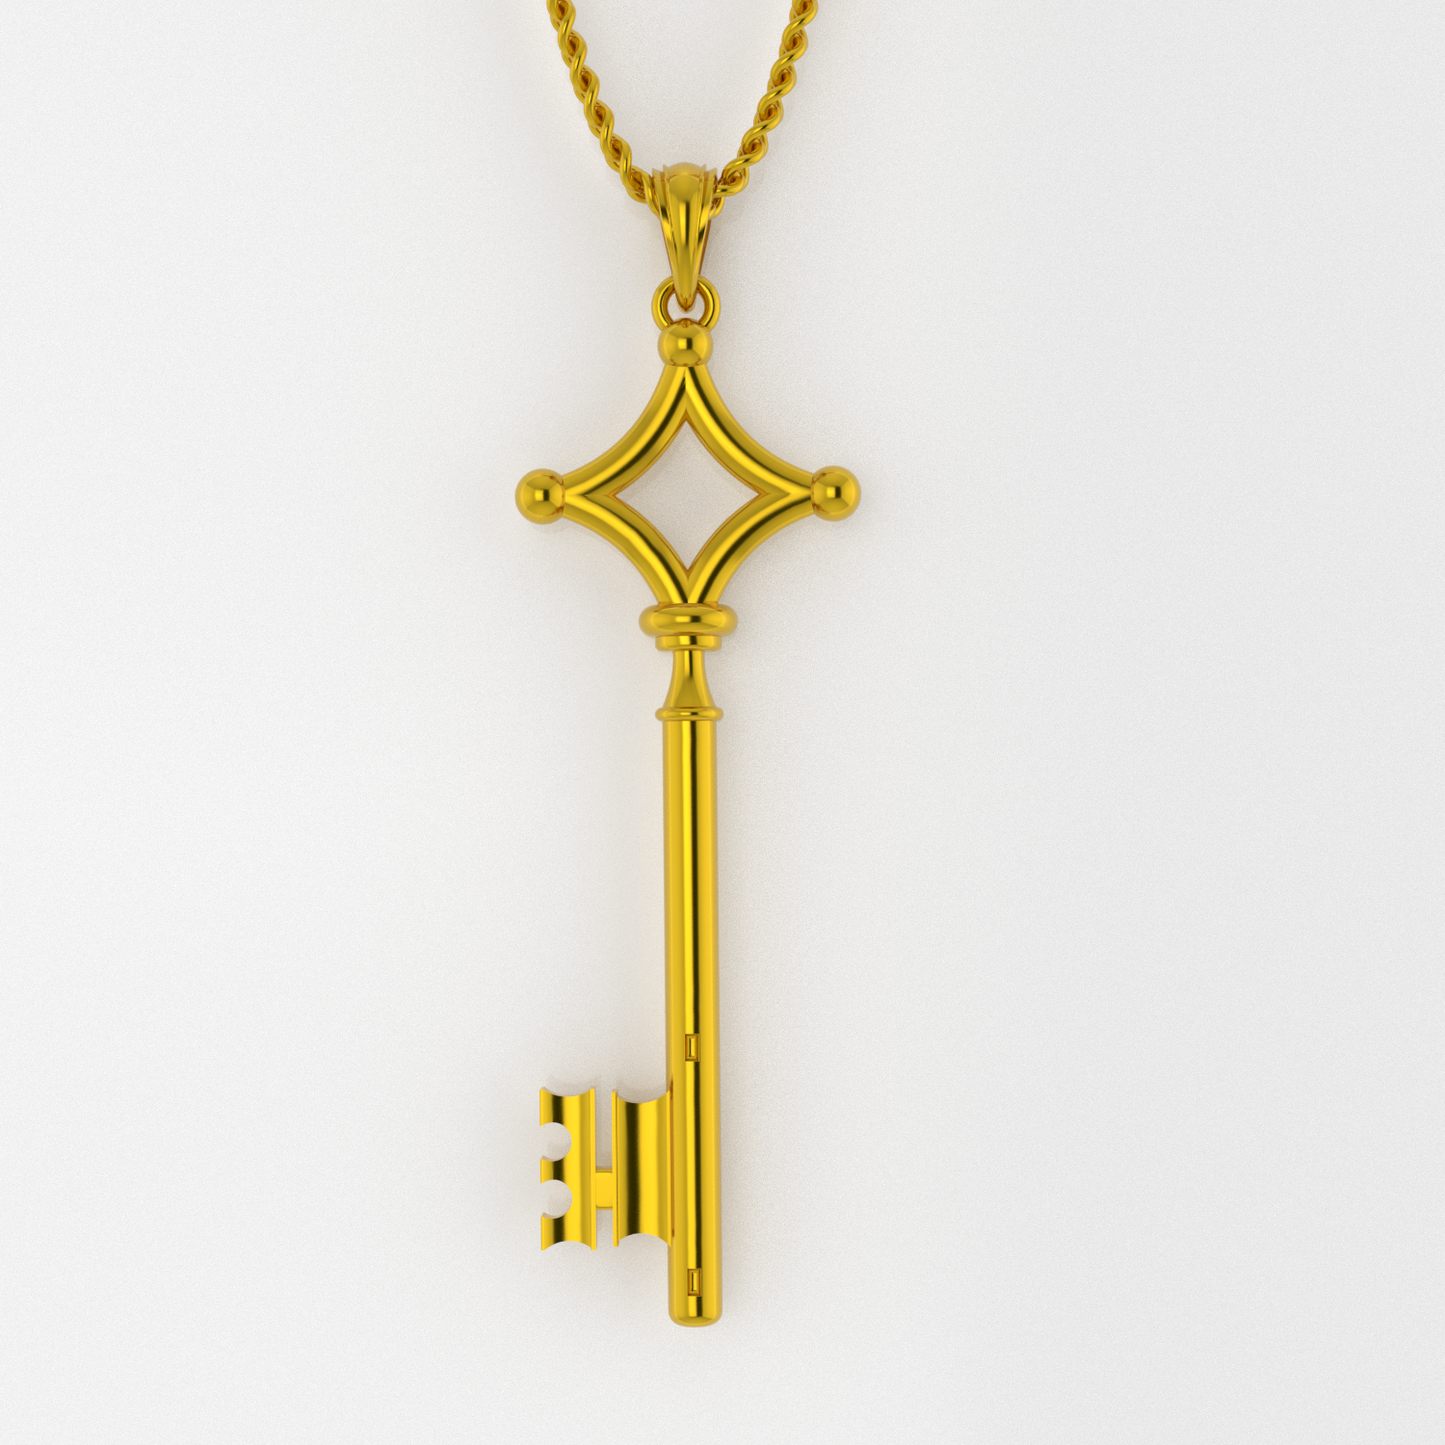 Eren's Key Pendant